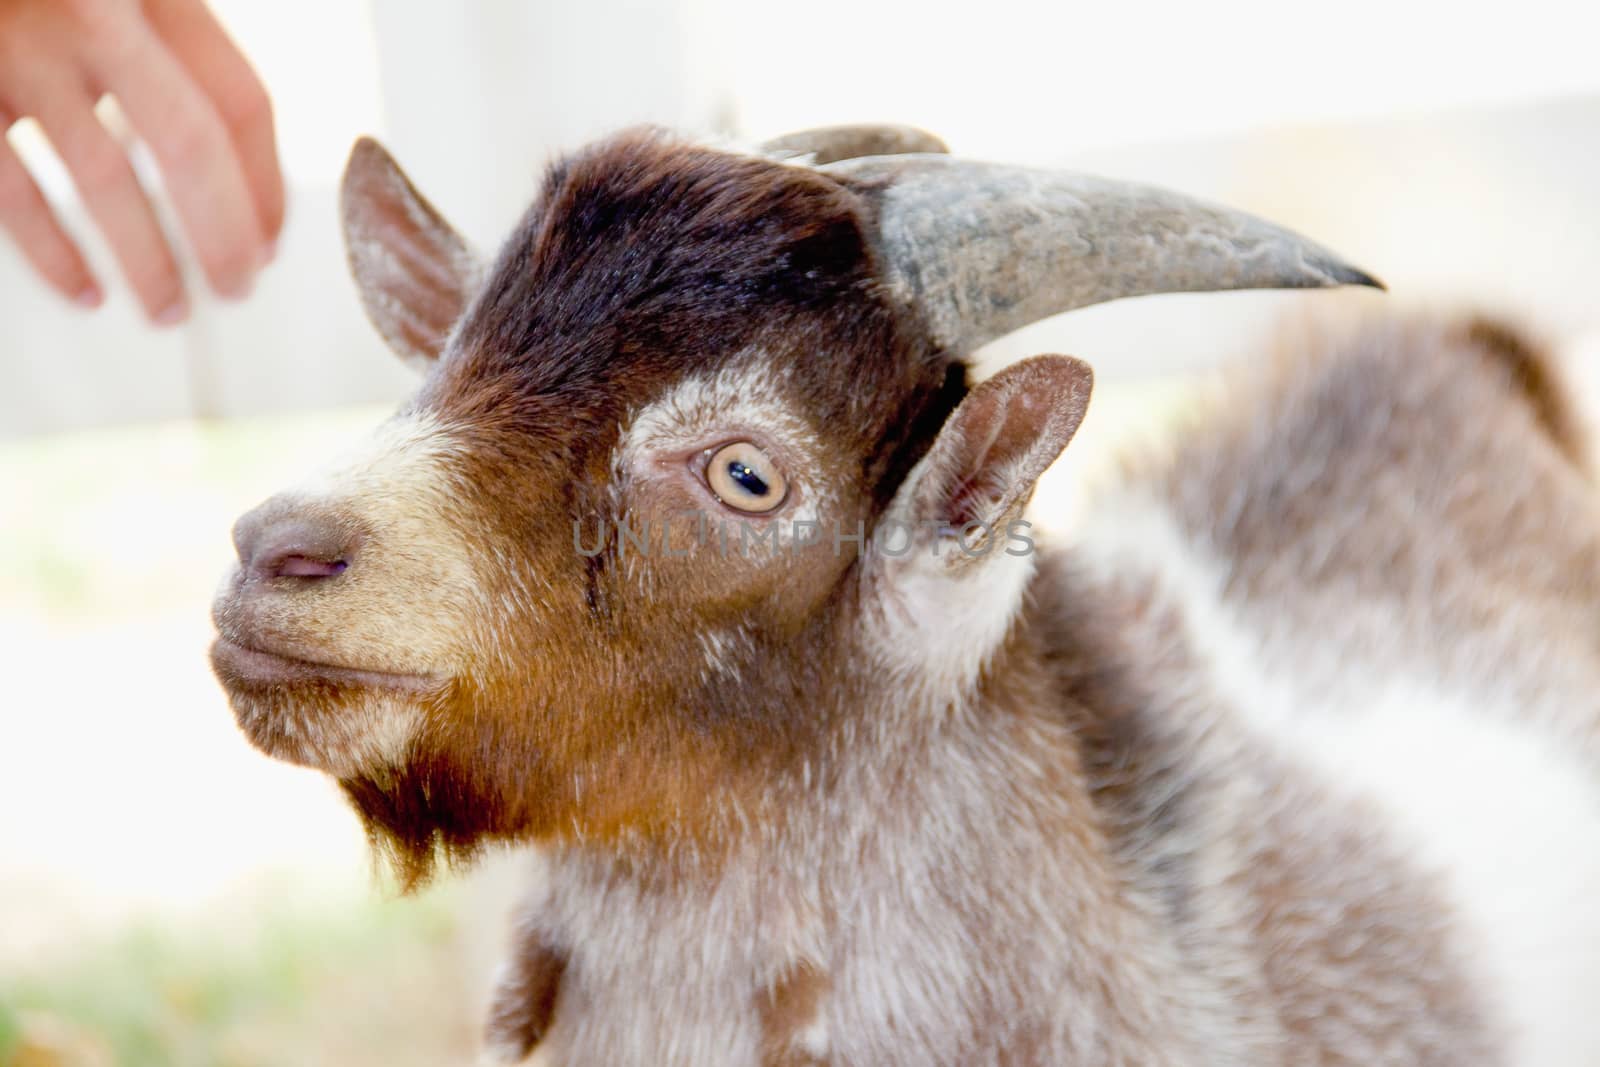 Closeup brown goat